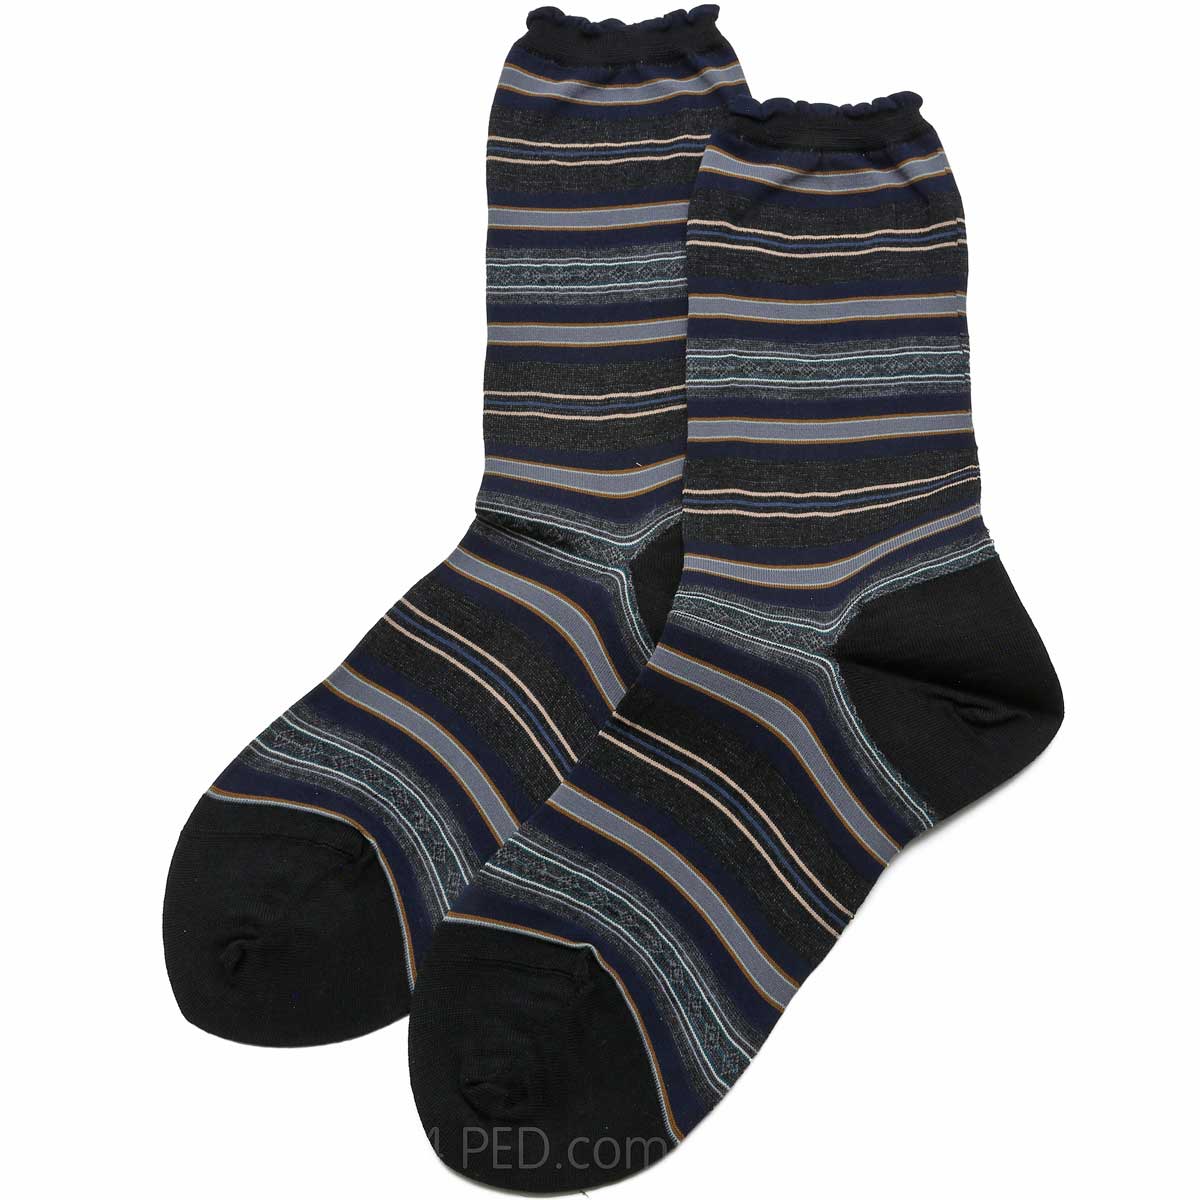 Antipast Rayas Socks in Black / Blue